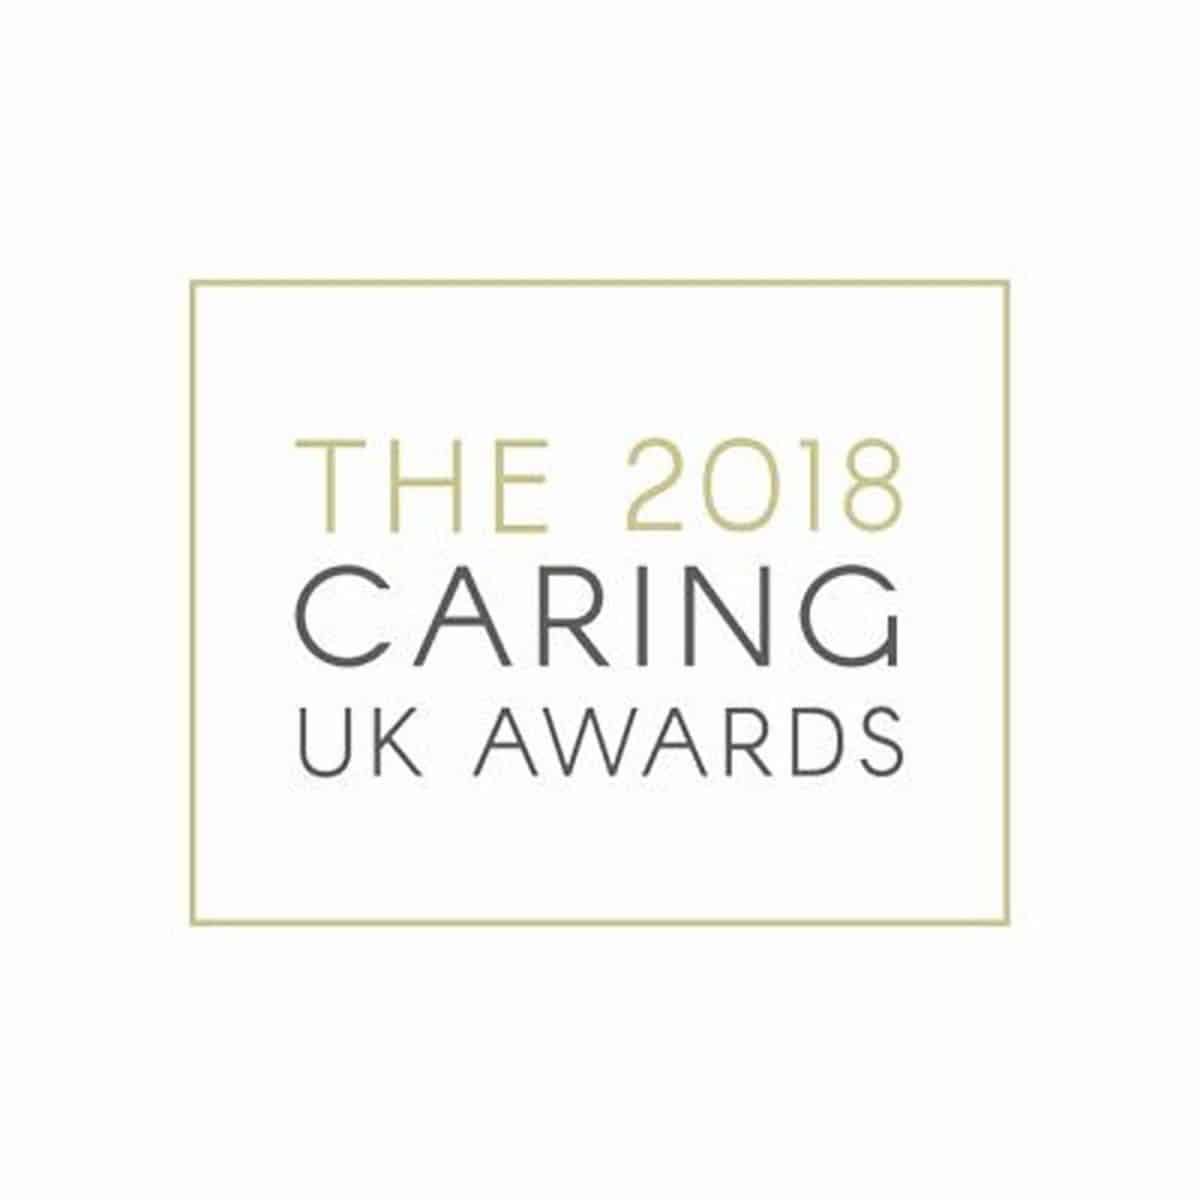 Caring UK Awards 2018 winners